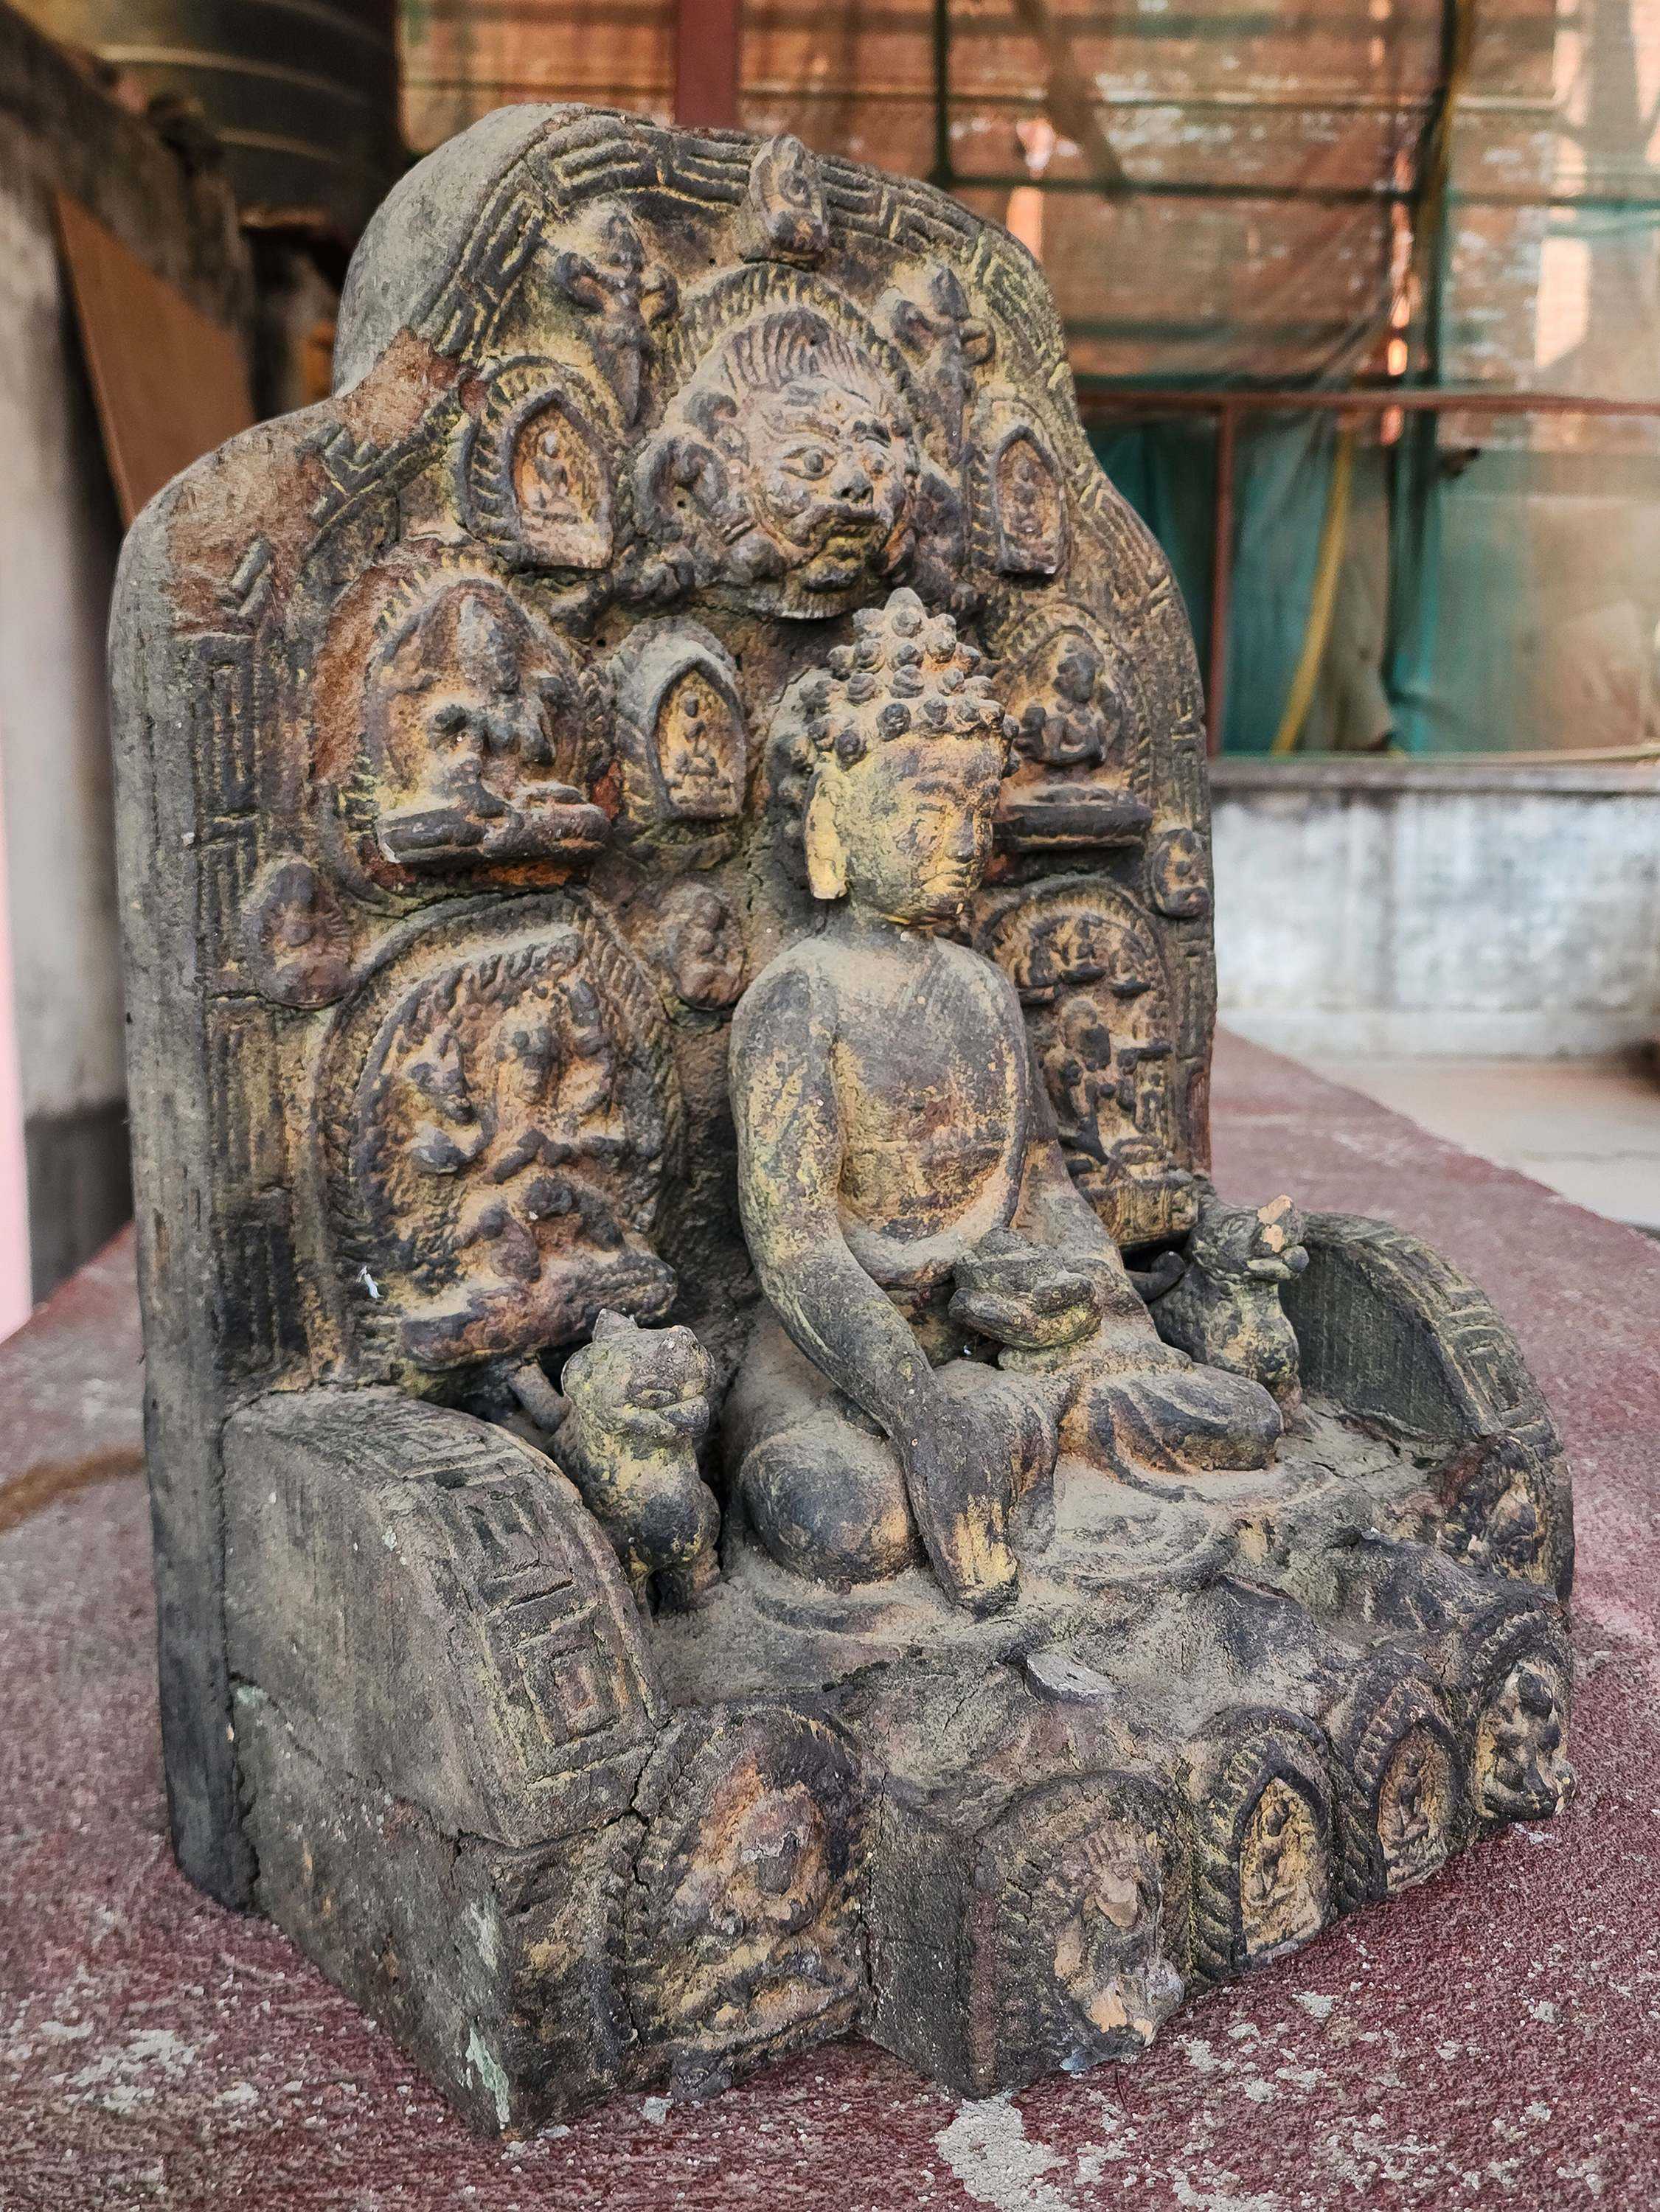 Buddhist Handmade Clay And Wooden Statue Of Shakyamuni Buddha On Throne antique